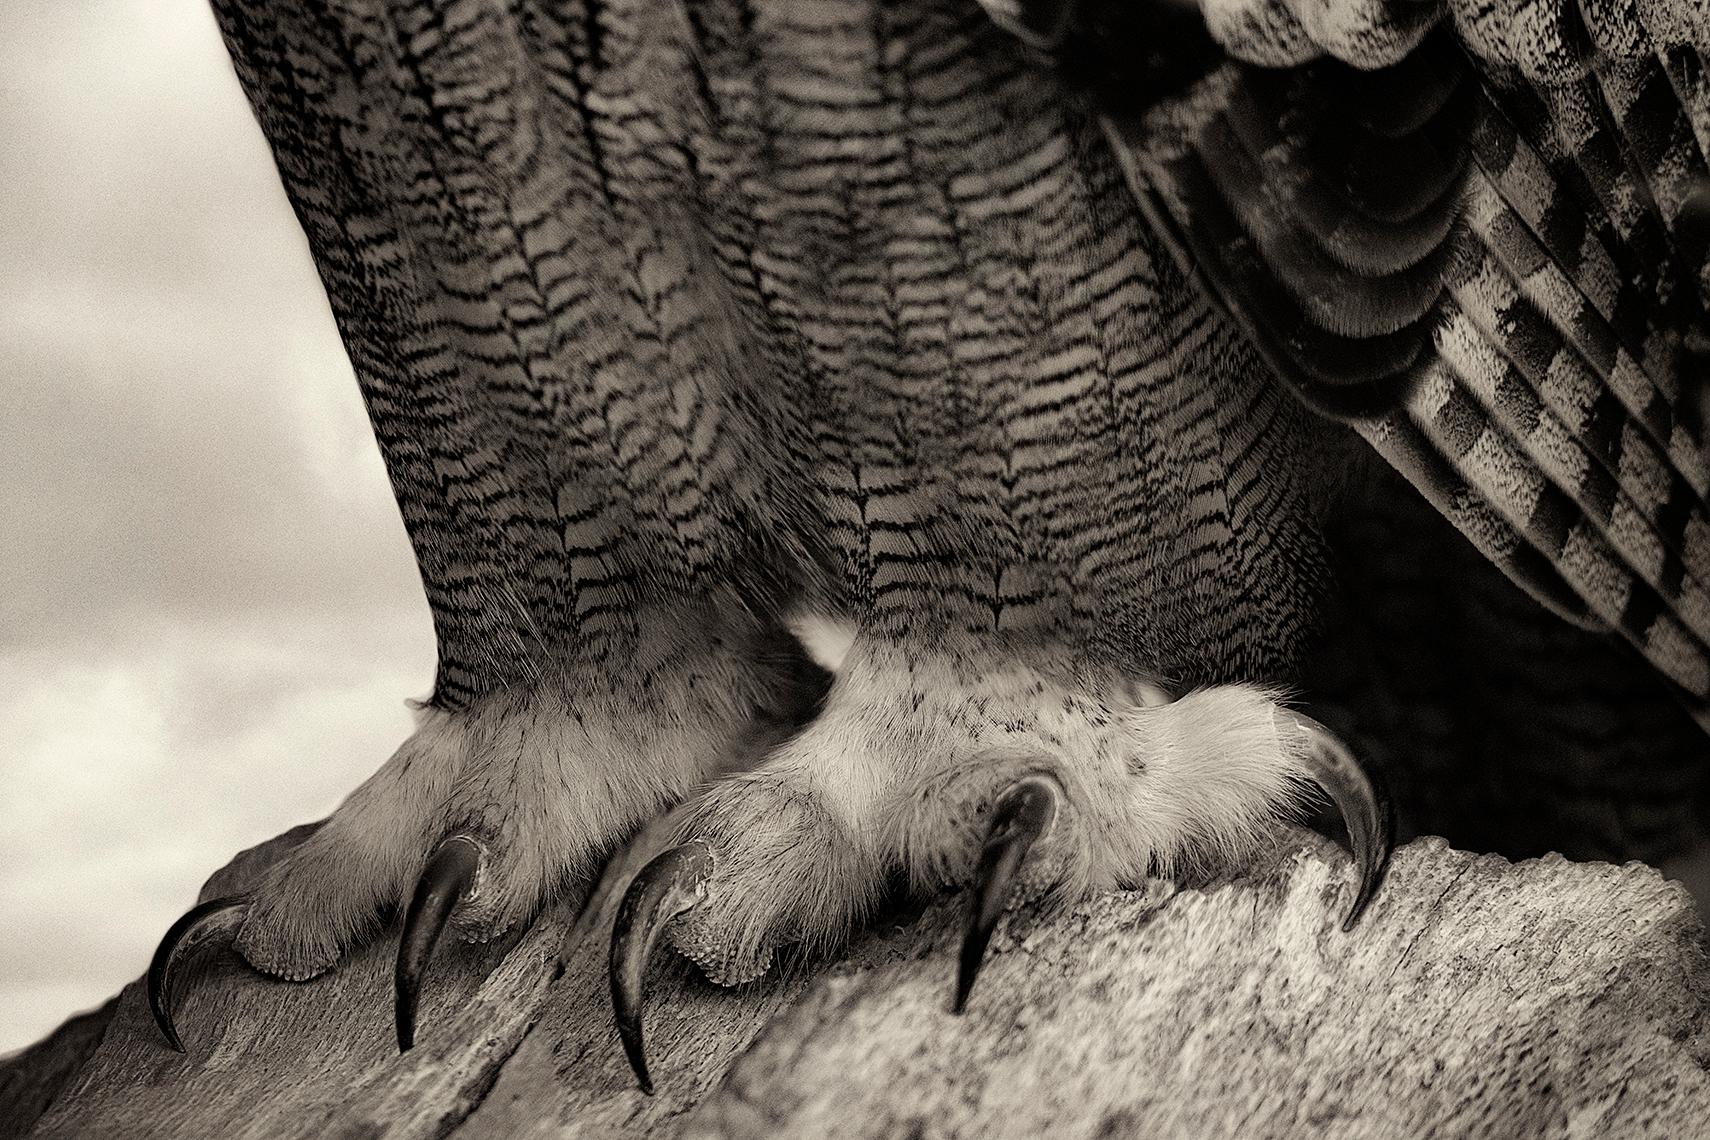 Beth Moon Black and White Photograph - Eagle Owl Feet, limited edition photograph, signed, Platinum/Palladium Print